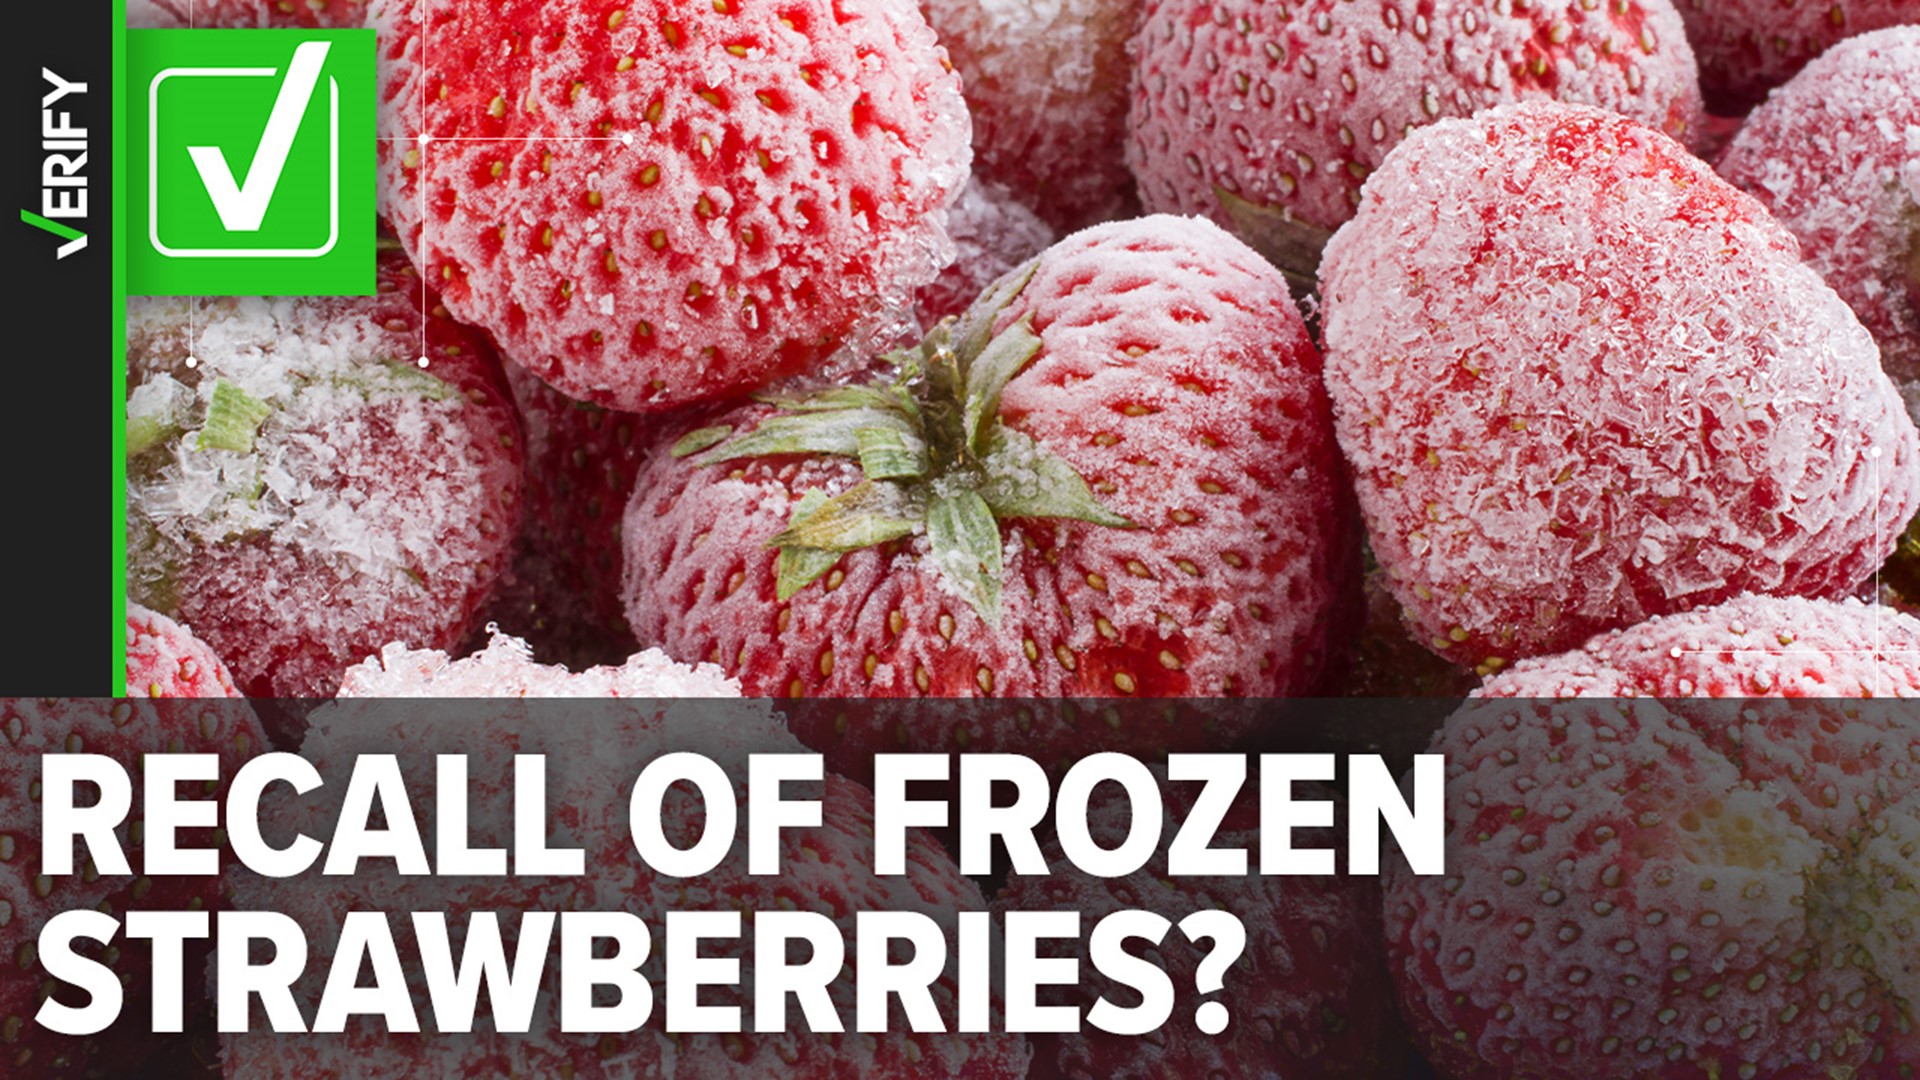 New hepatitis A recall for frozen organic strawberries